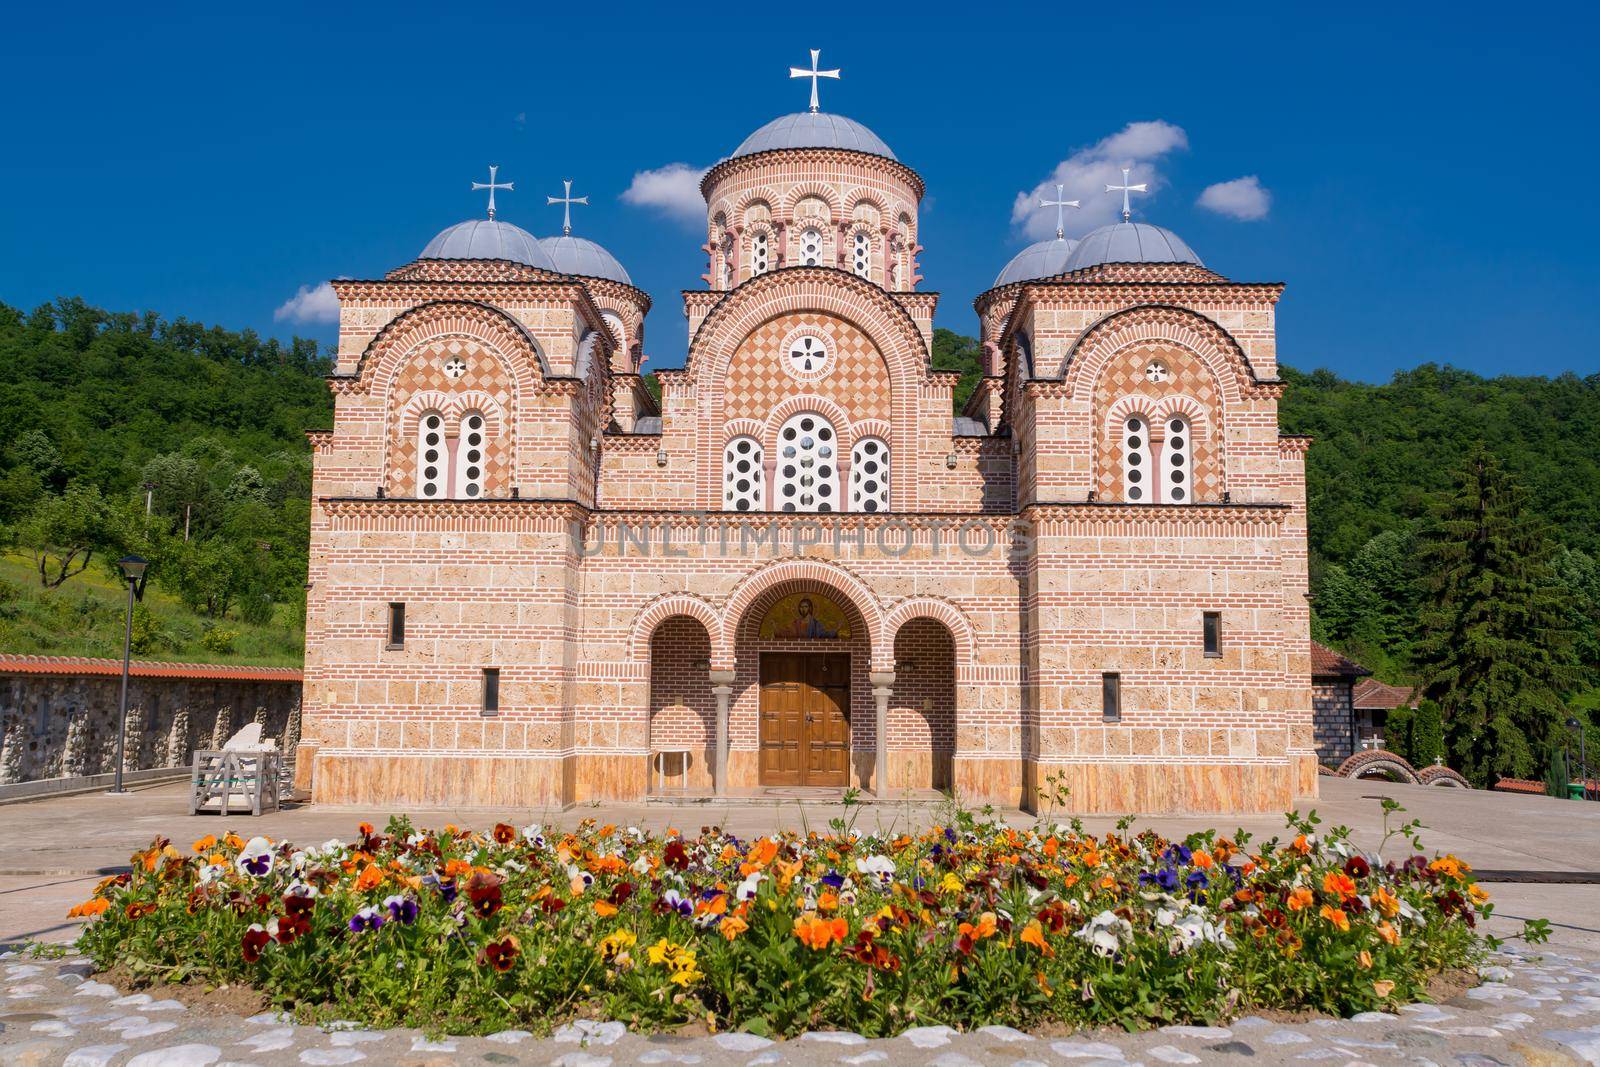 Celije - famous Orthodox monasteri near Valjevo, West Serbia, Europe